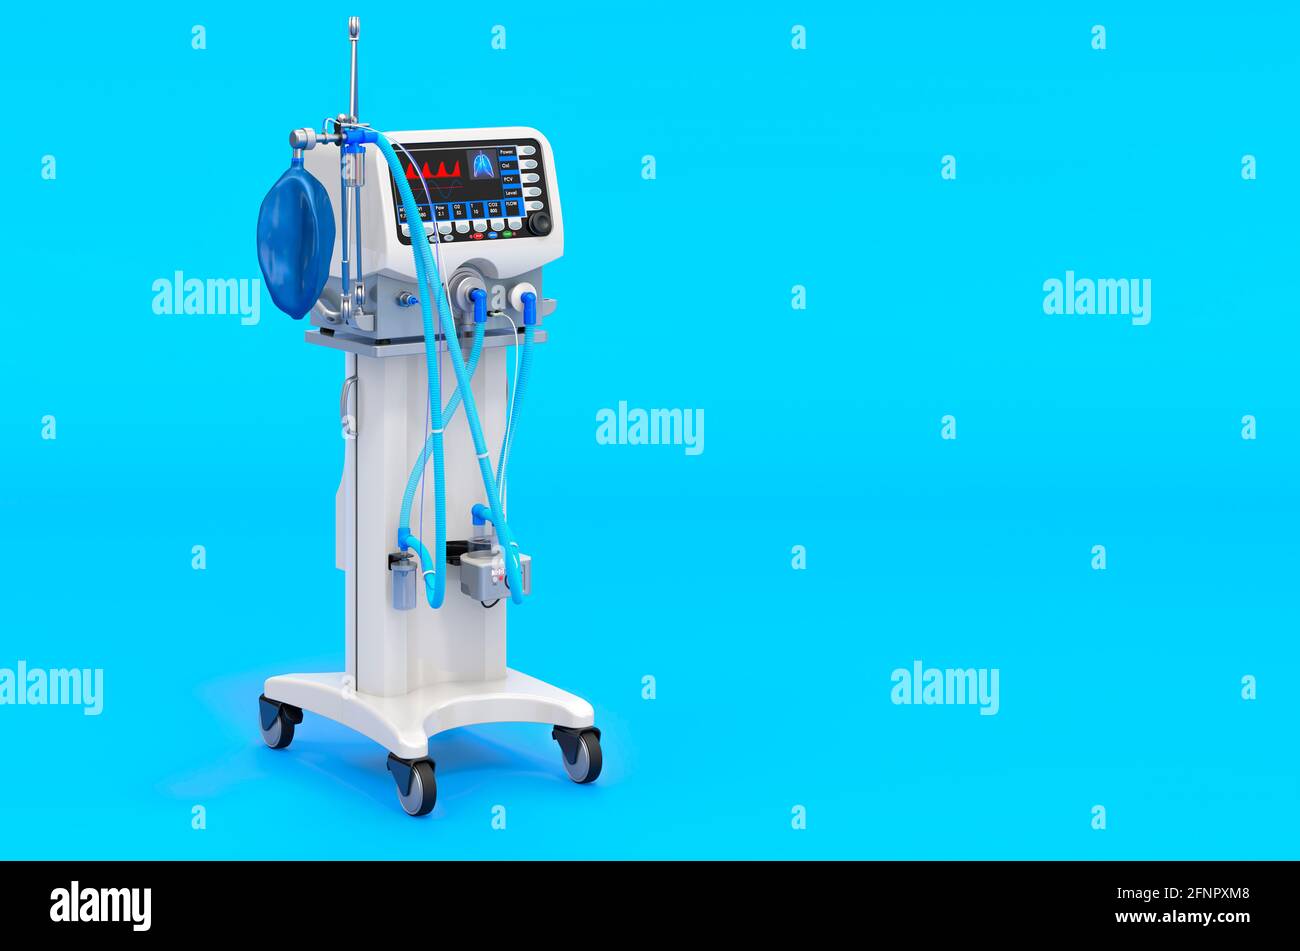 Ventilator for artificial ventilation, 3D rendering on blue background Stock Photo